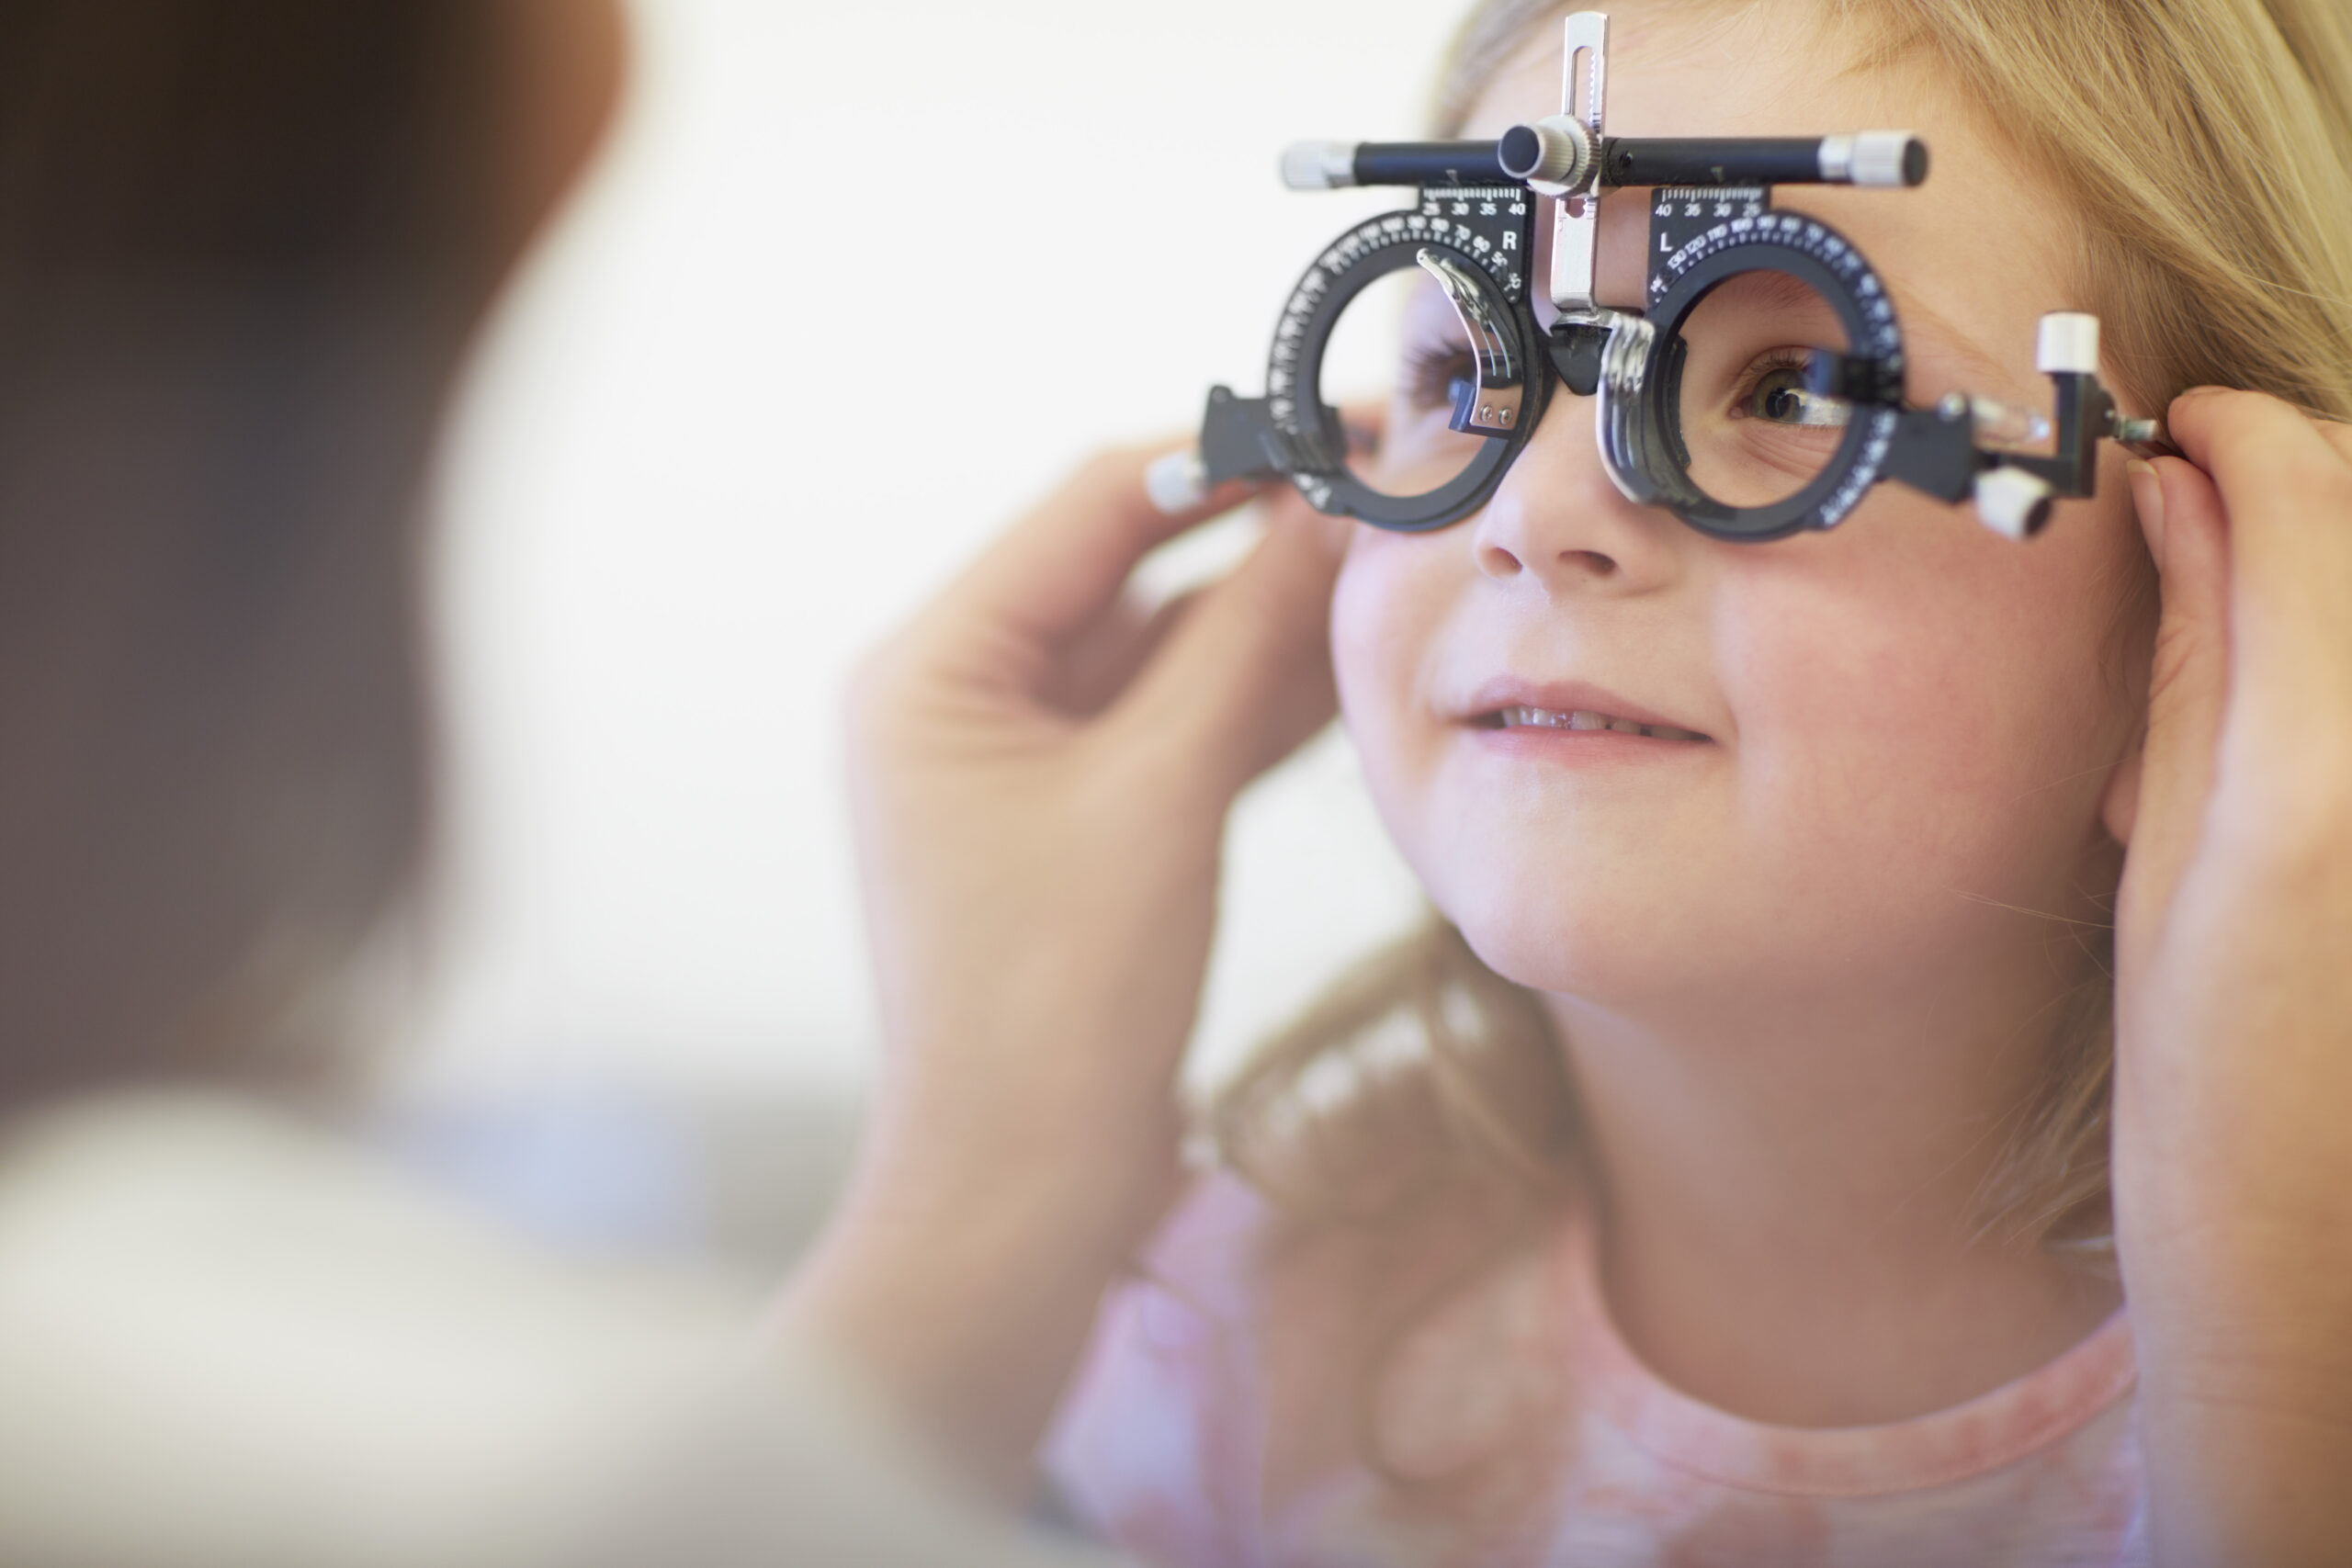 Eye Doctor Examining Girl S Vision 2022 12 16 22 05 24 Utc Scaled 